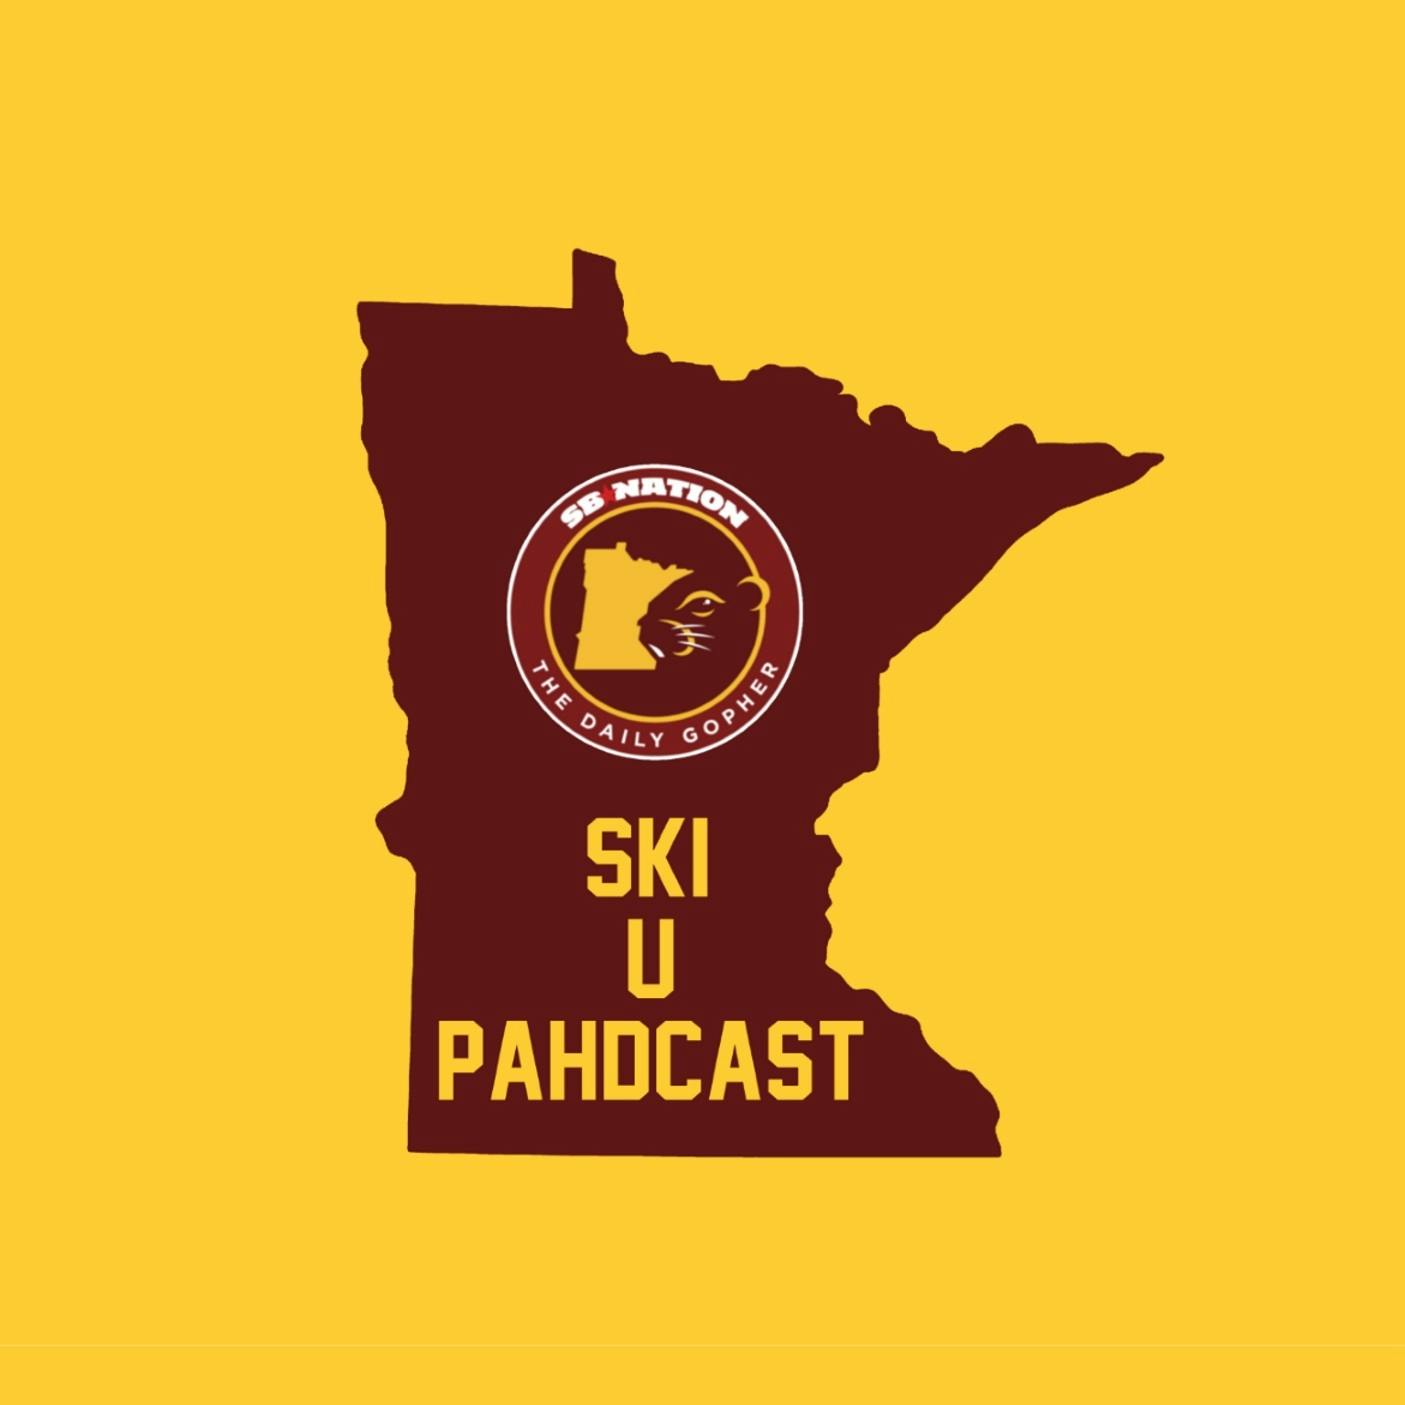 Ski-U-Pahdcast - Ep 6.13: Bringing home the bacon